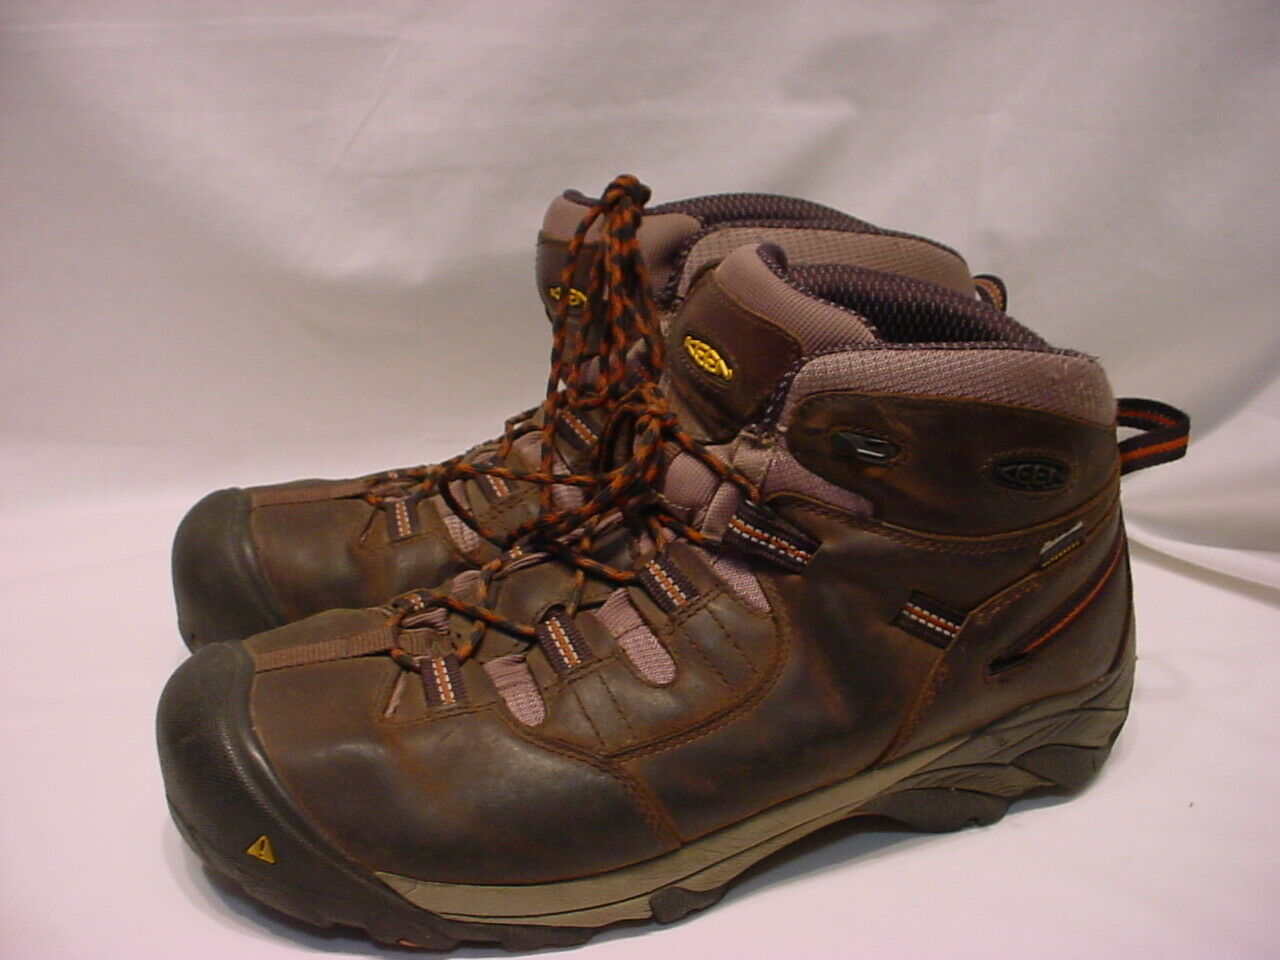 KEEN Dry - Men's Hiking Boots - ASTM F2892-11 - Waterproof - Size 15 EE - Brown